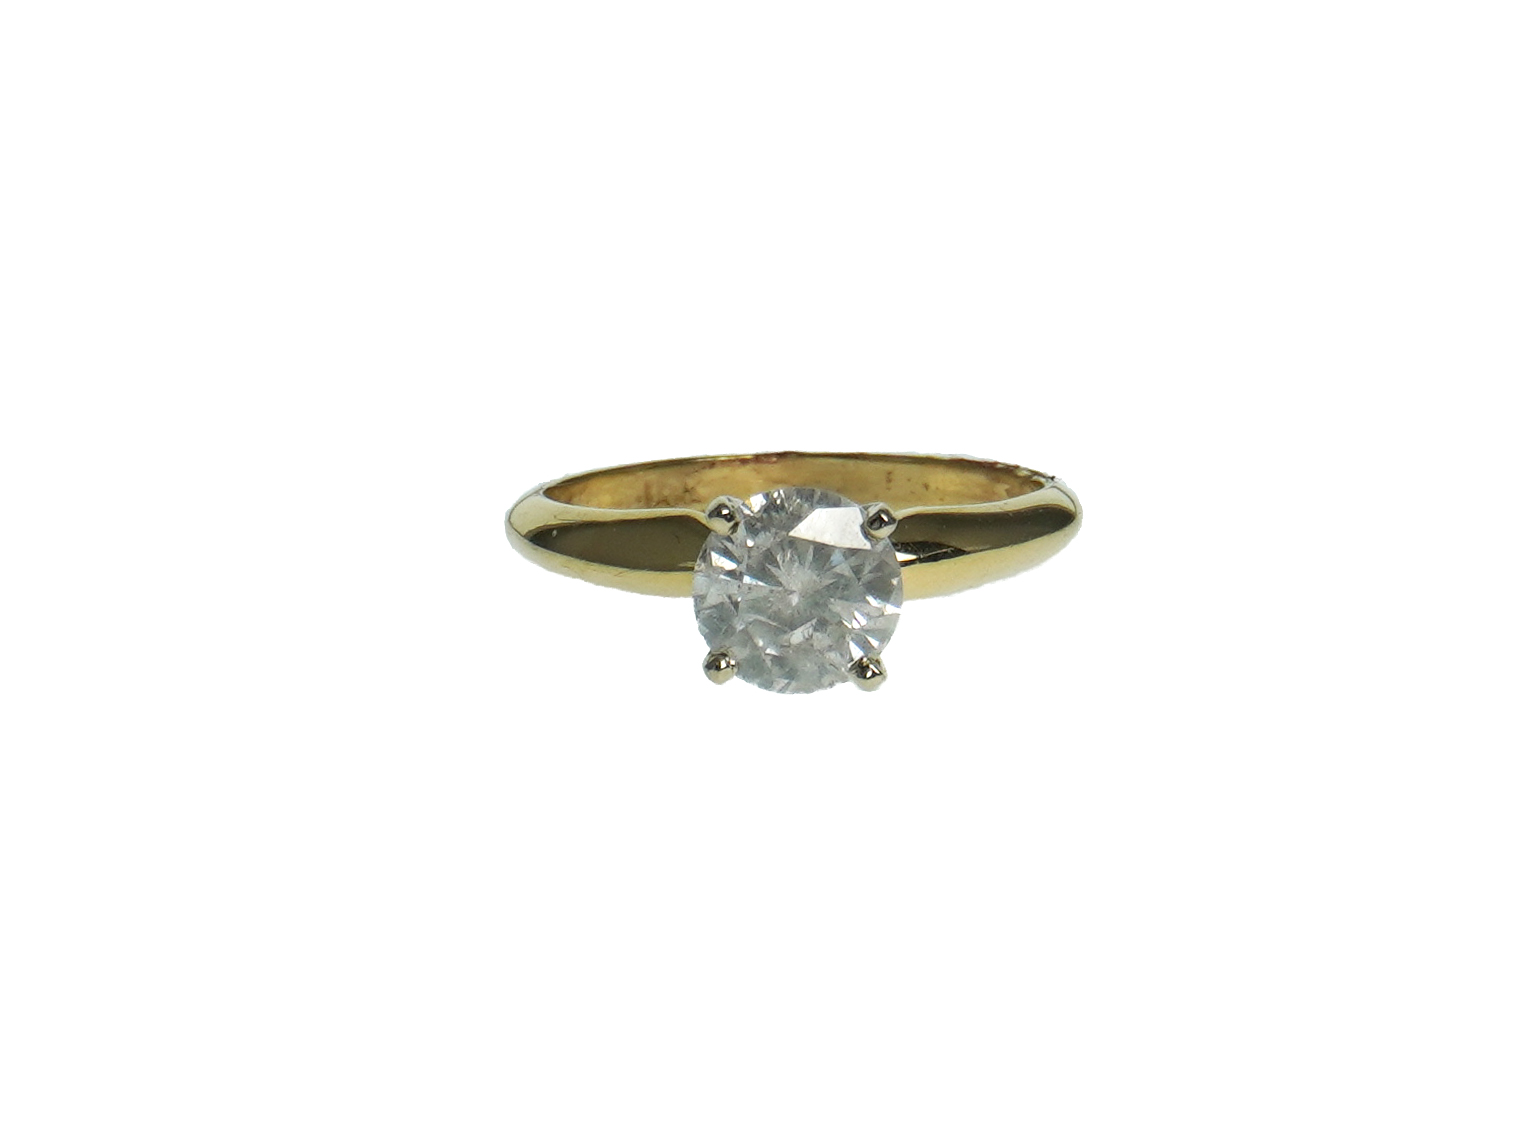 14KT Gold Ladies Diamond Ring M282-08865-14KY | Dondero's Jewelry |  Vineland, NJ